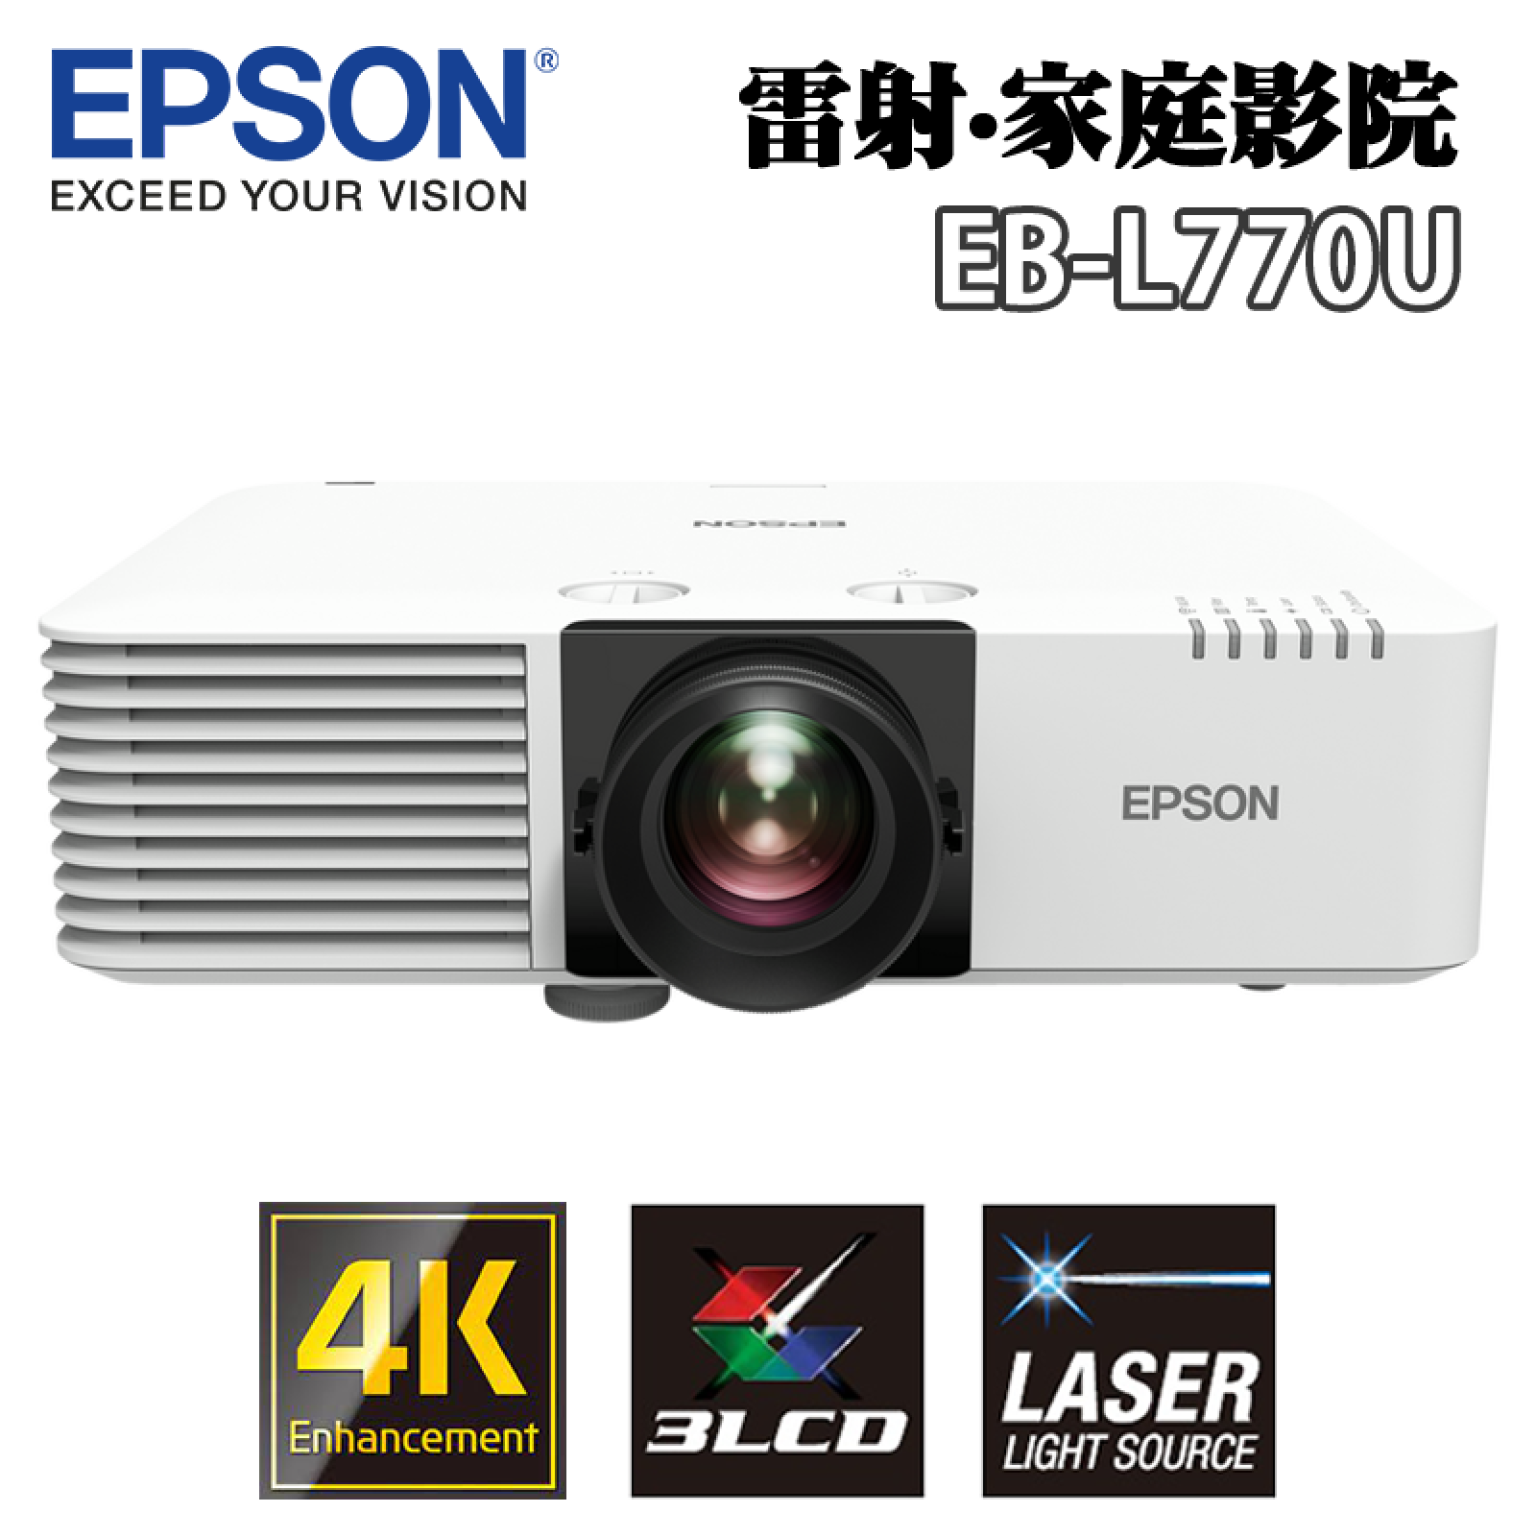 EPSON-L770U-Main-1536x1536.png